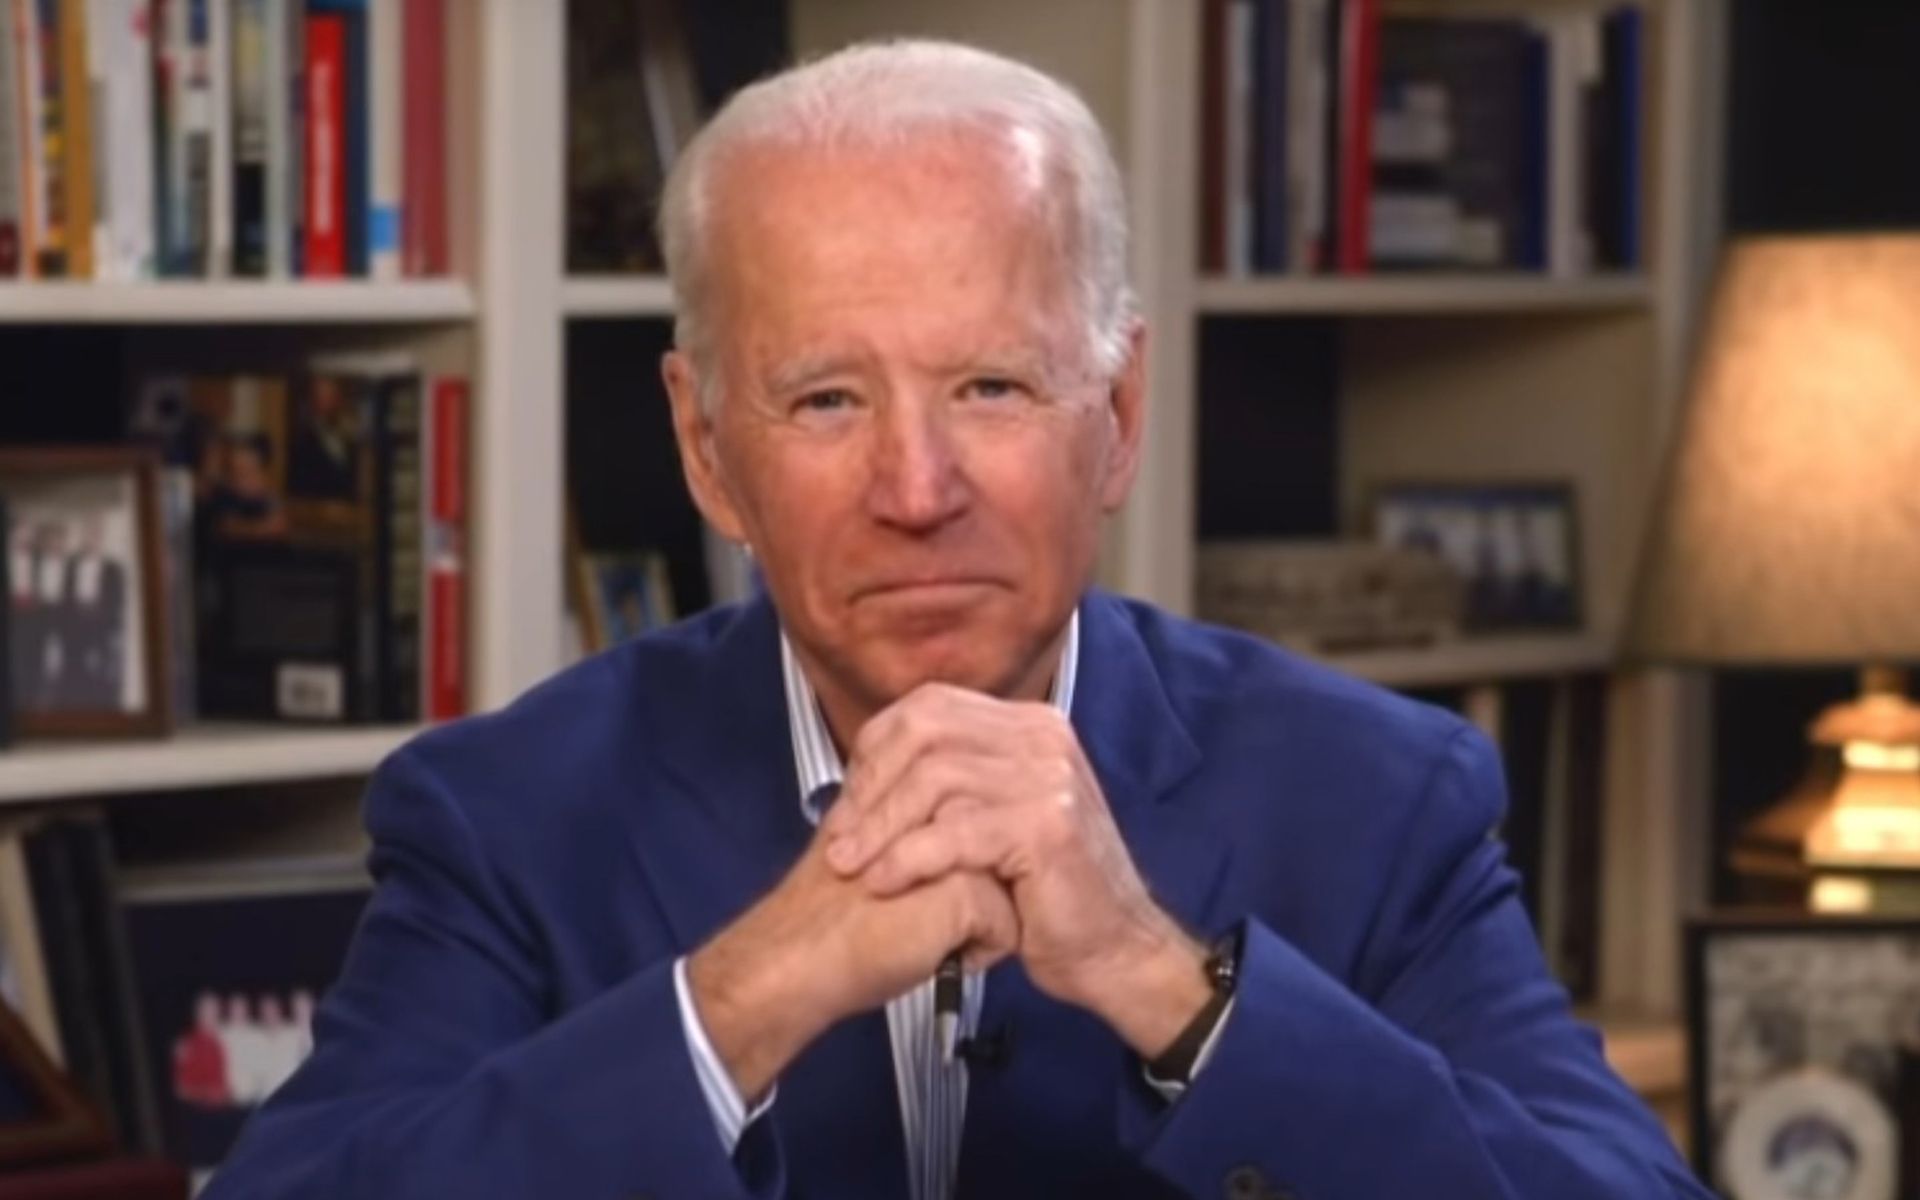 Biden: "I Could've Stopped The Pandemic Sooner, I'm Built Different"